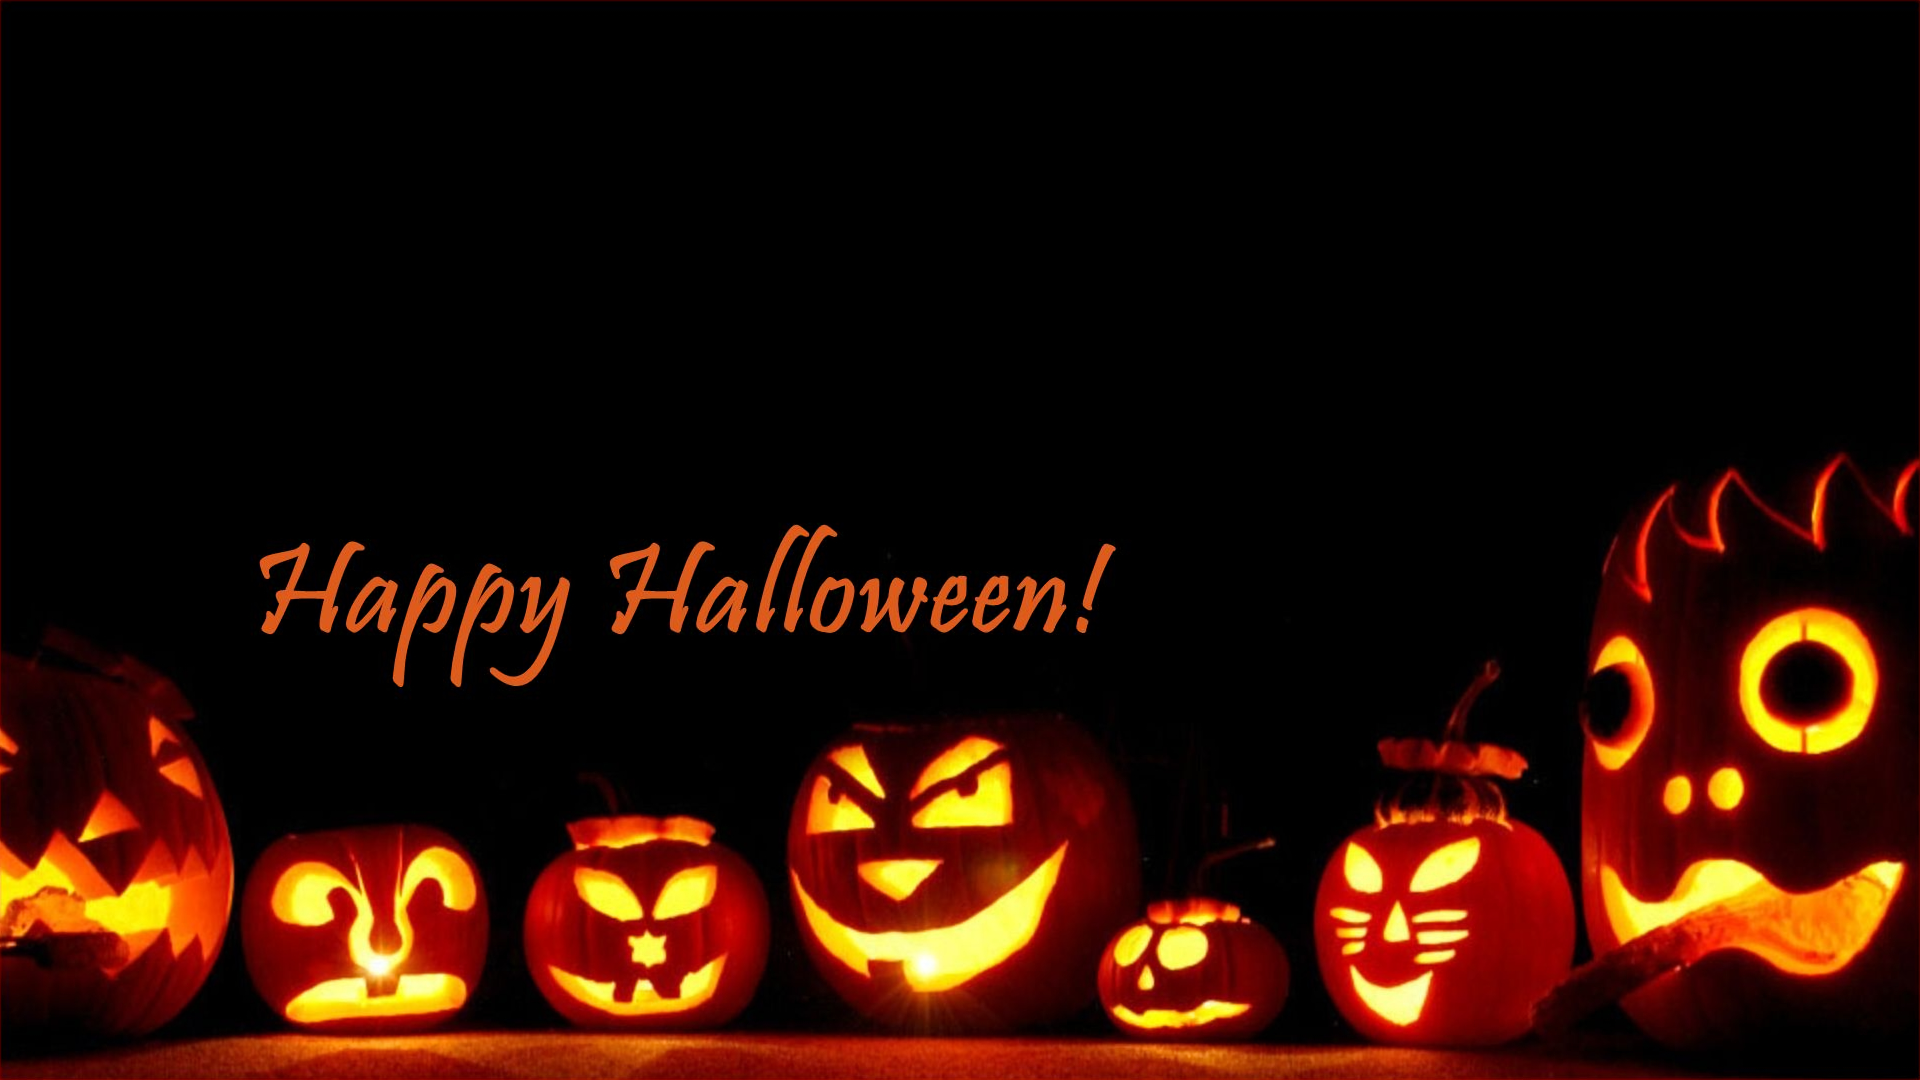 Holiday Halloween Holiday Happy Halloween Jack O' Lantern Wallpaper. Halloween Picture, Halloween Background, Halloween Wallpaper